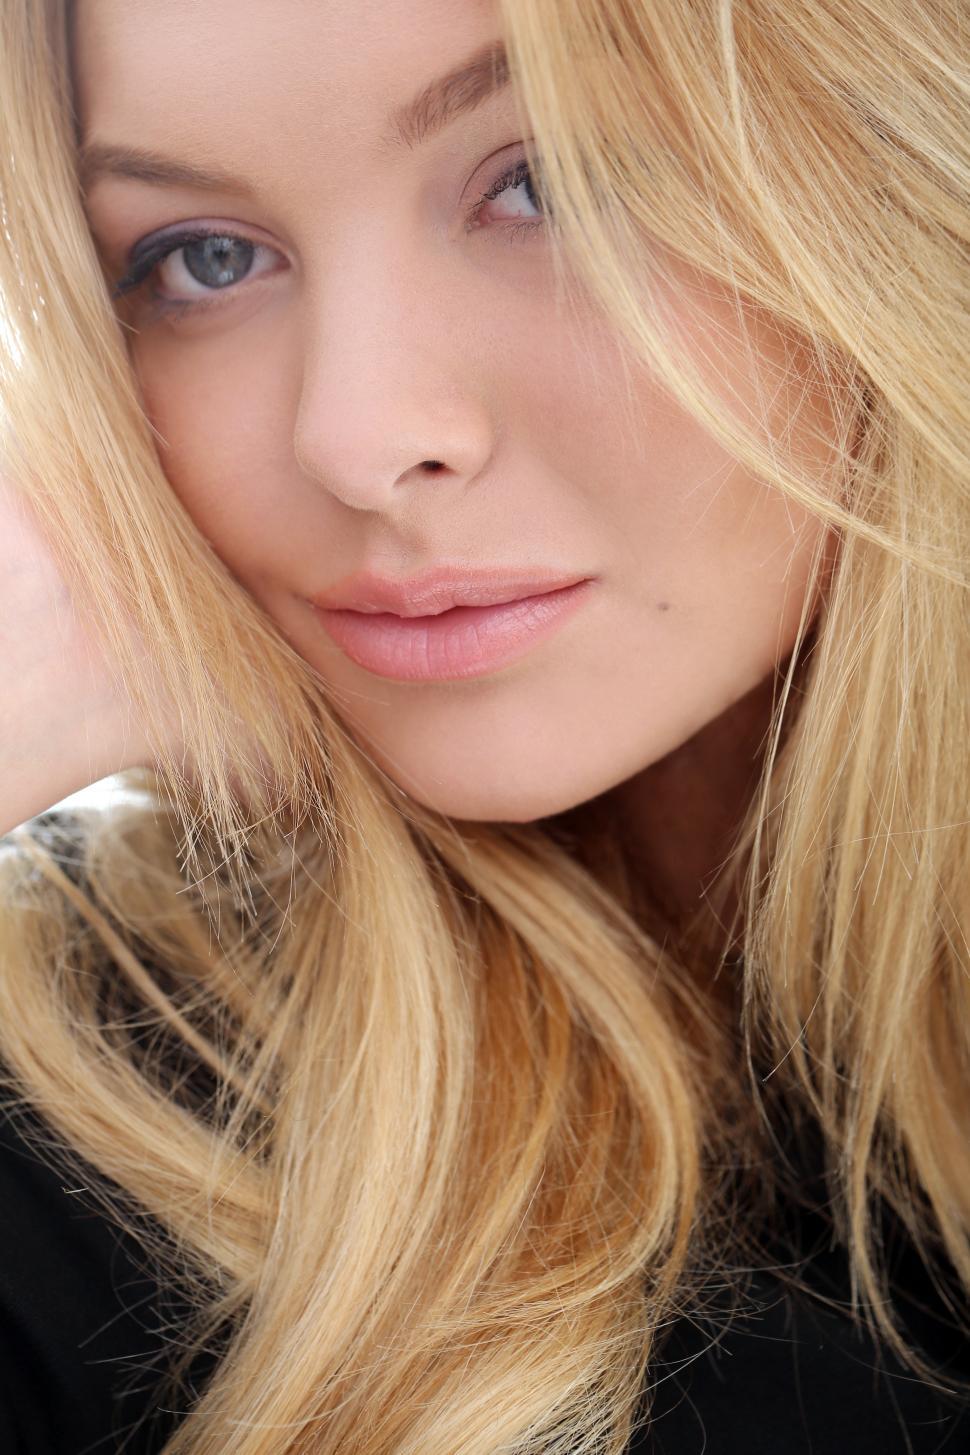 Free Image of Closeup of blonde woman 